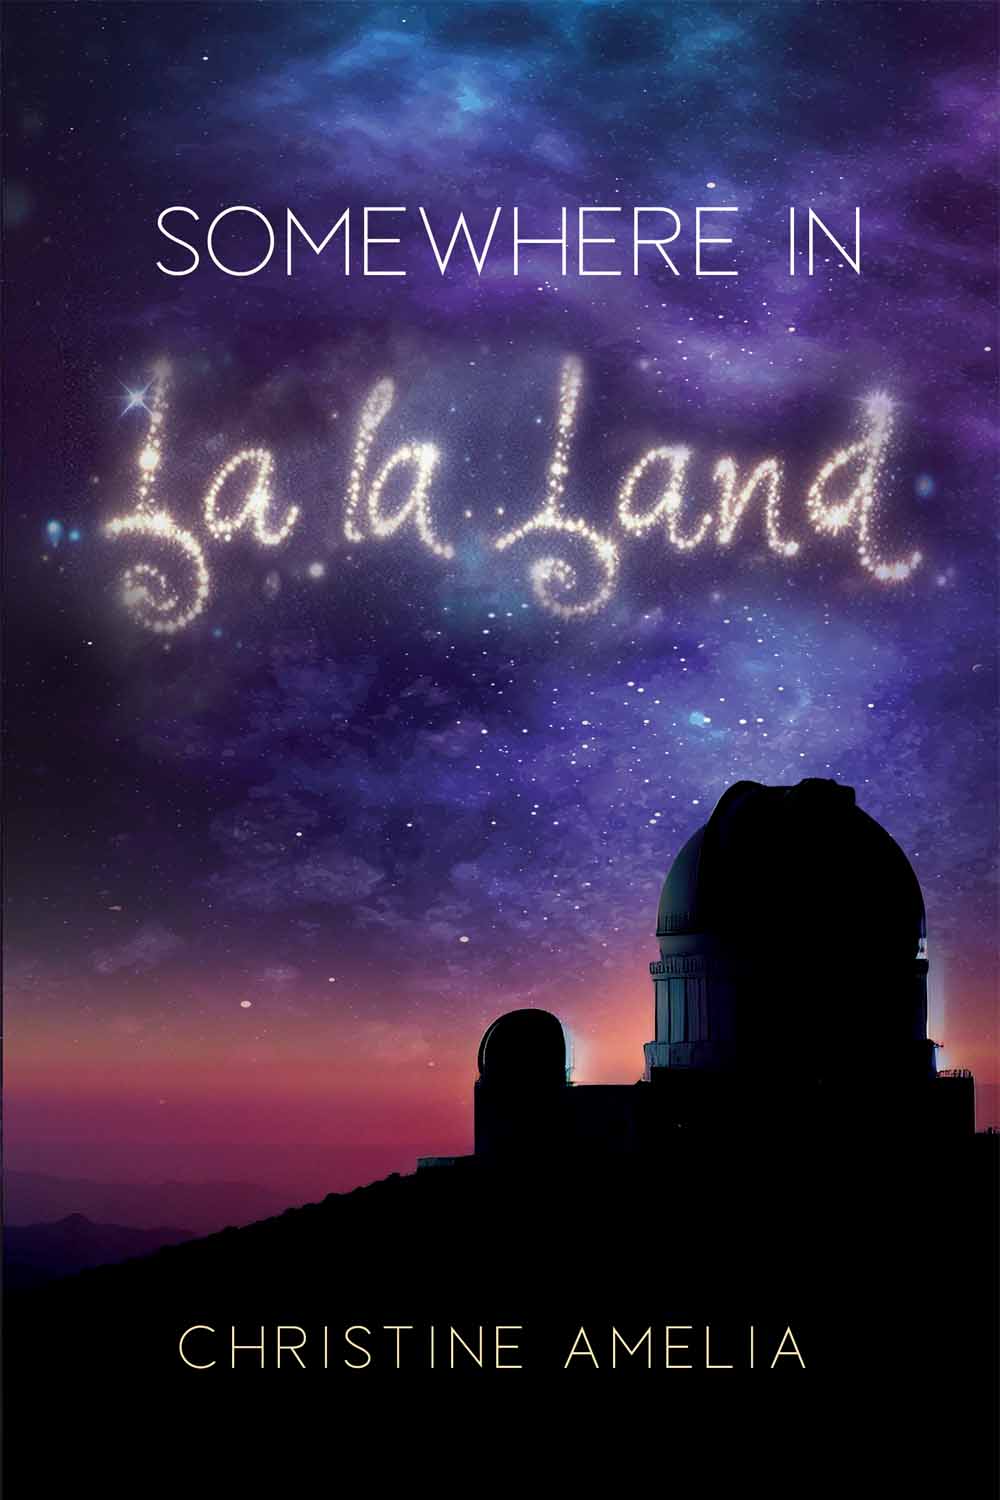 Somewhere in La La Land by Christine Amelia